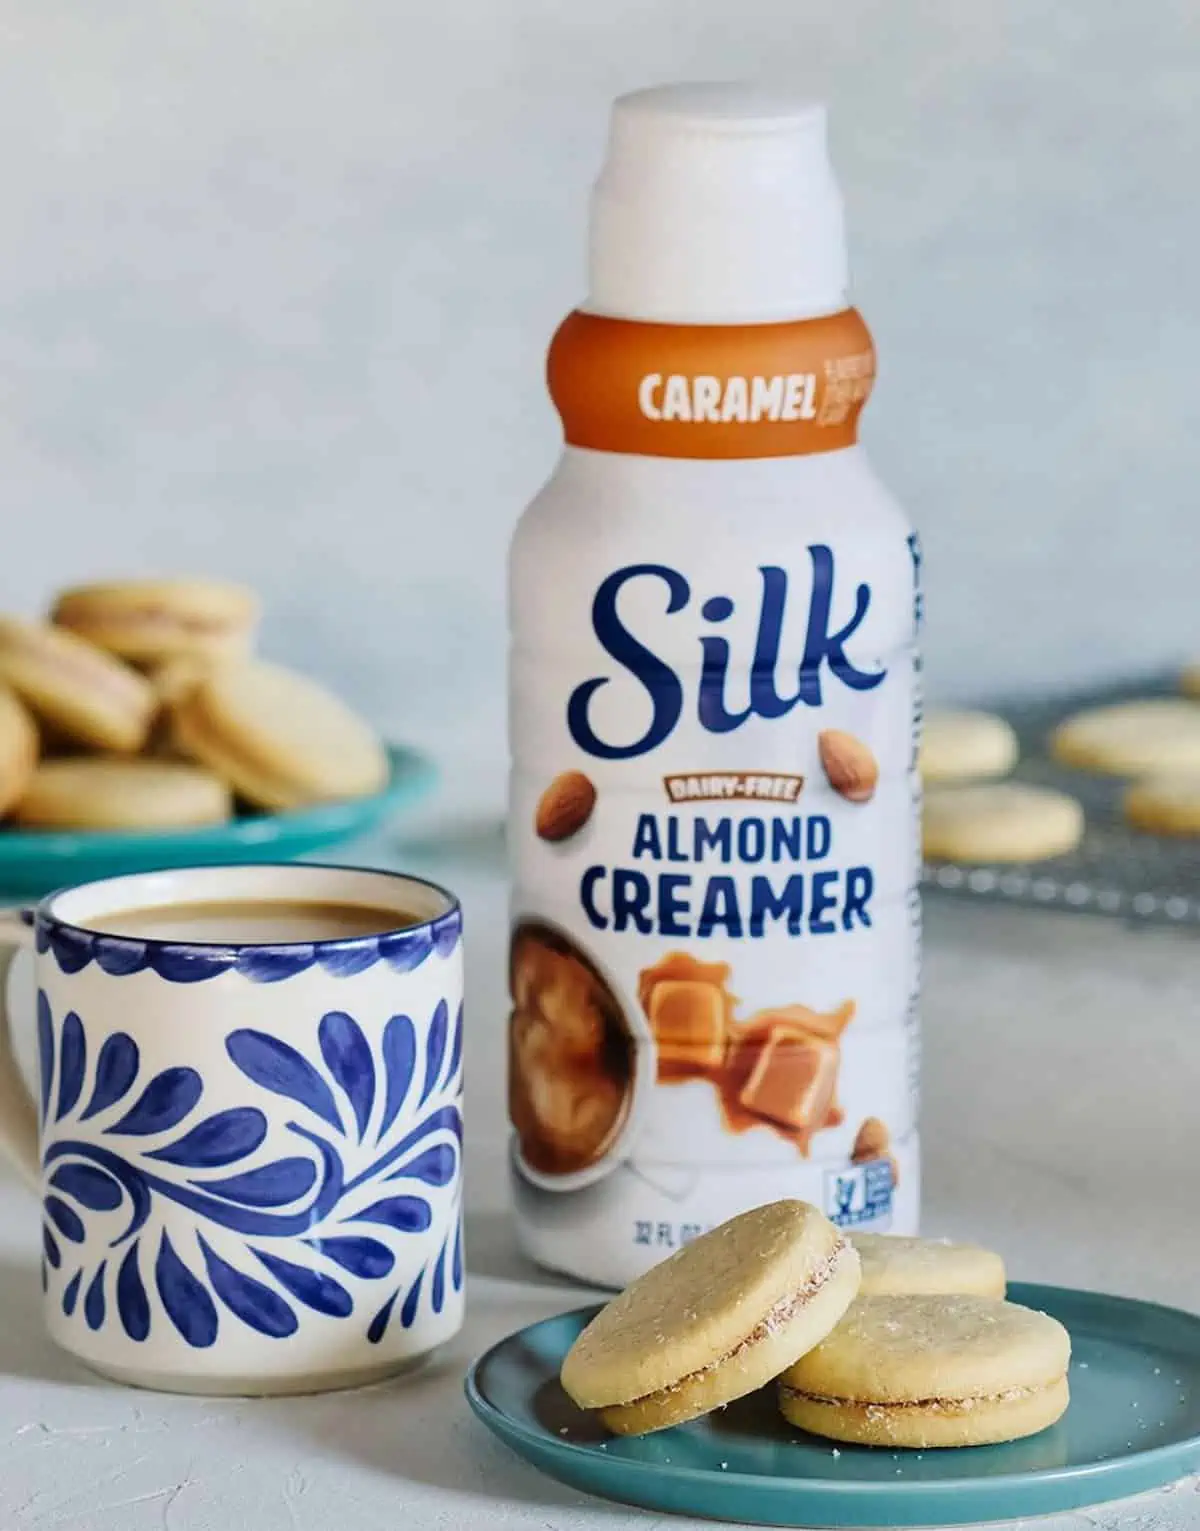 Silk Caramel Almond Creamer beside a mug and plate of cookies.